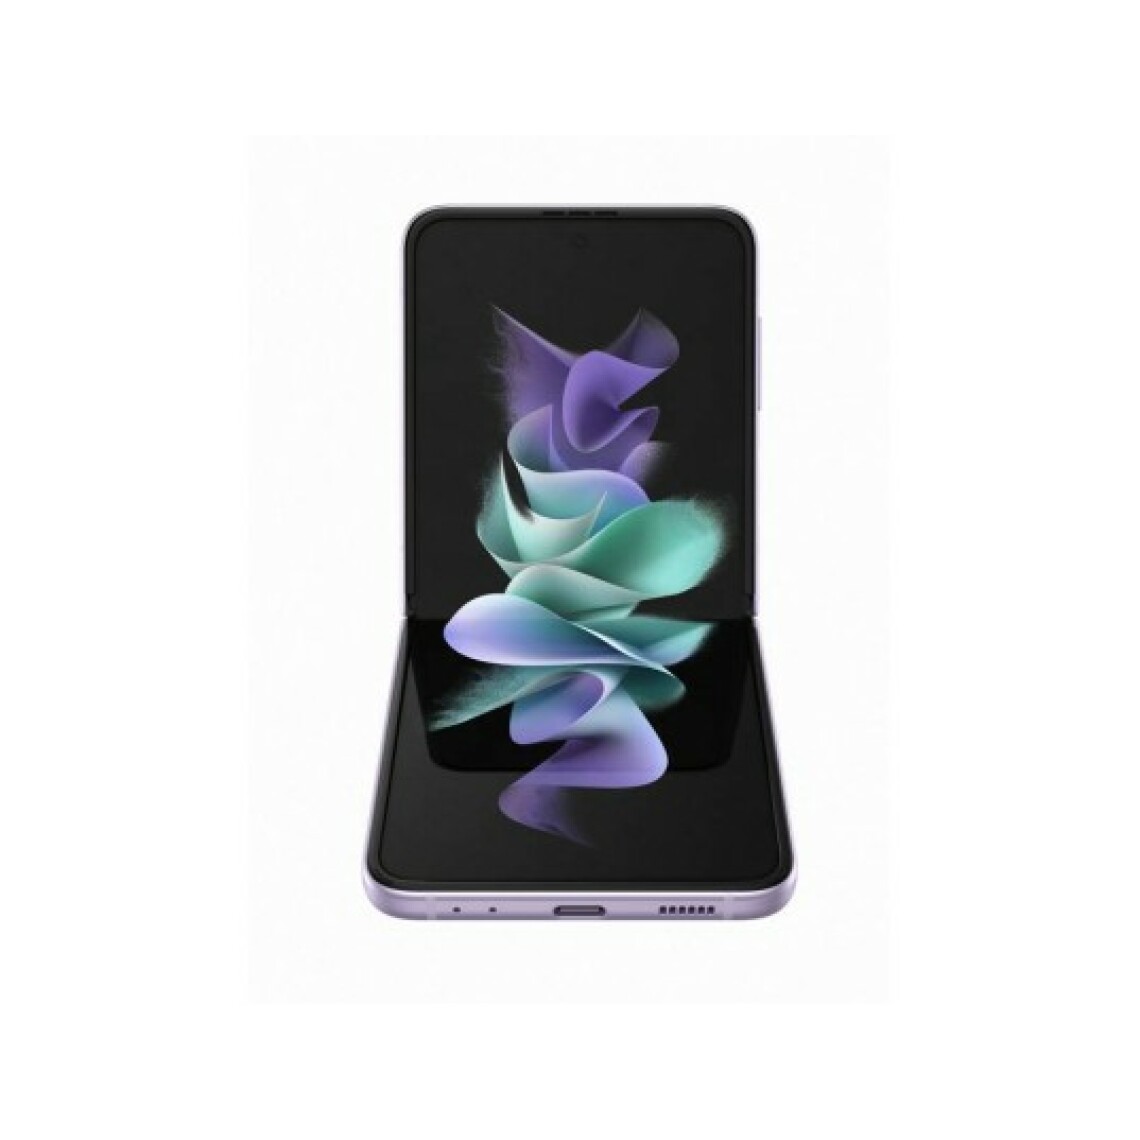 Samsung - Smartphone GALAXY-ZFLIP3-256-PURPLE - Smartphone Android